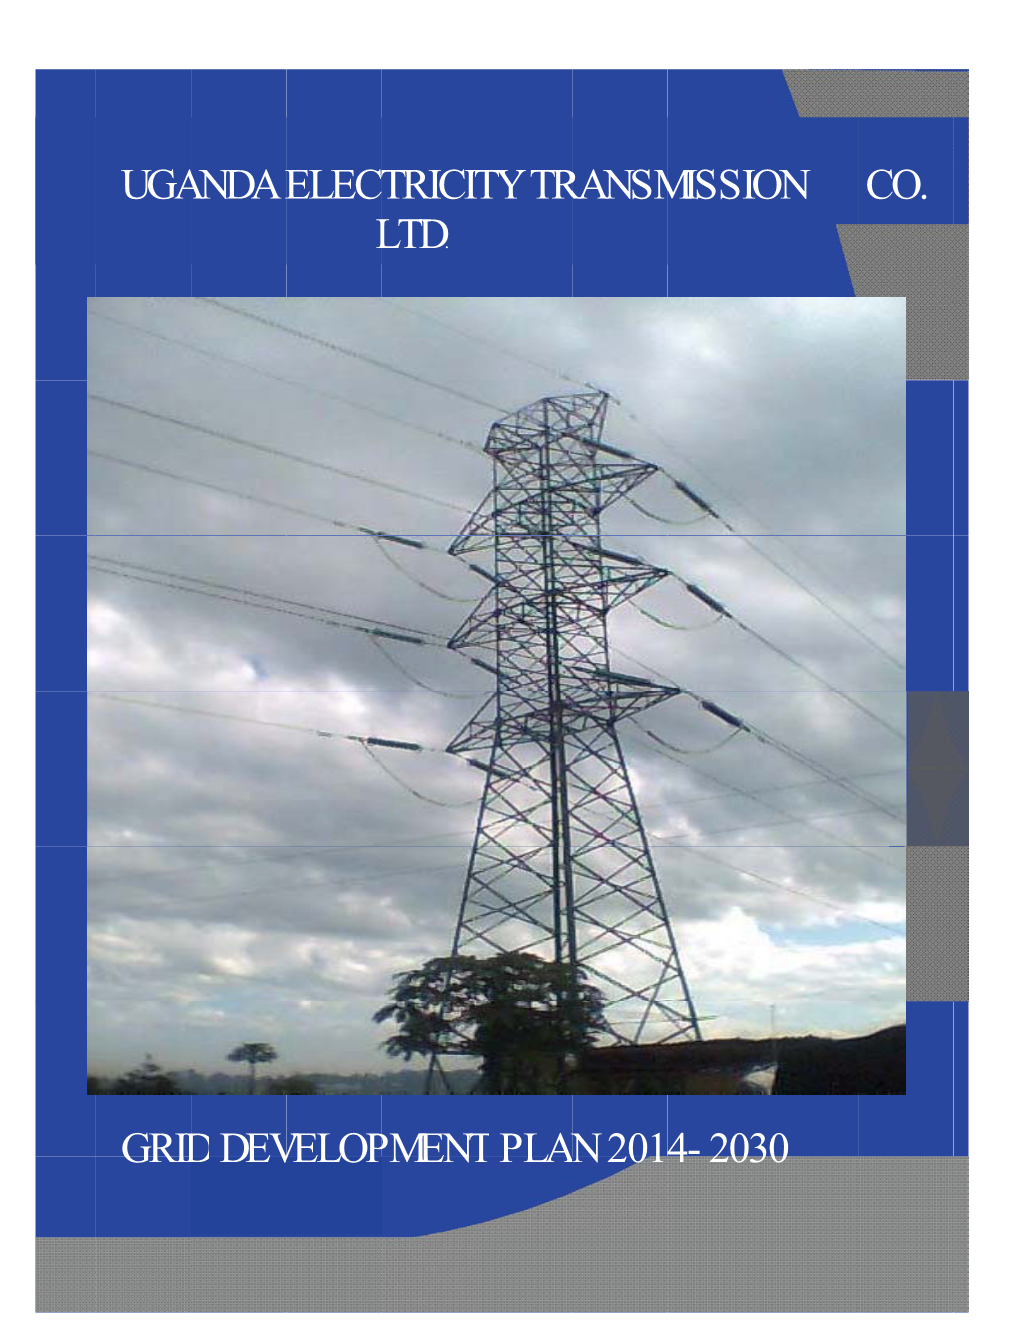 Uga Grid Anda D Dev Elect L Velop Tricit Ltd. Pment Ty Tr T Pla Ransm N 2014